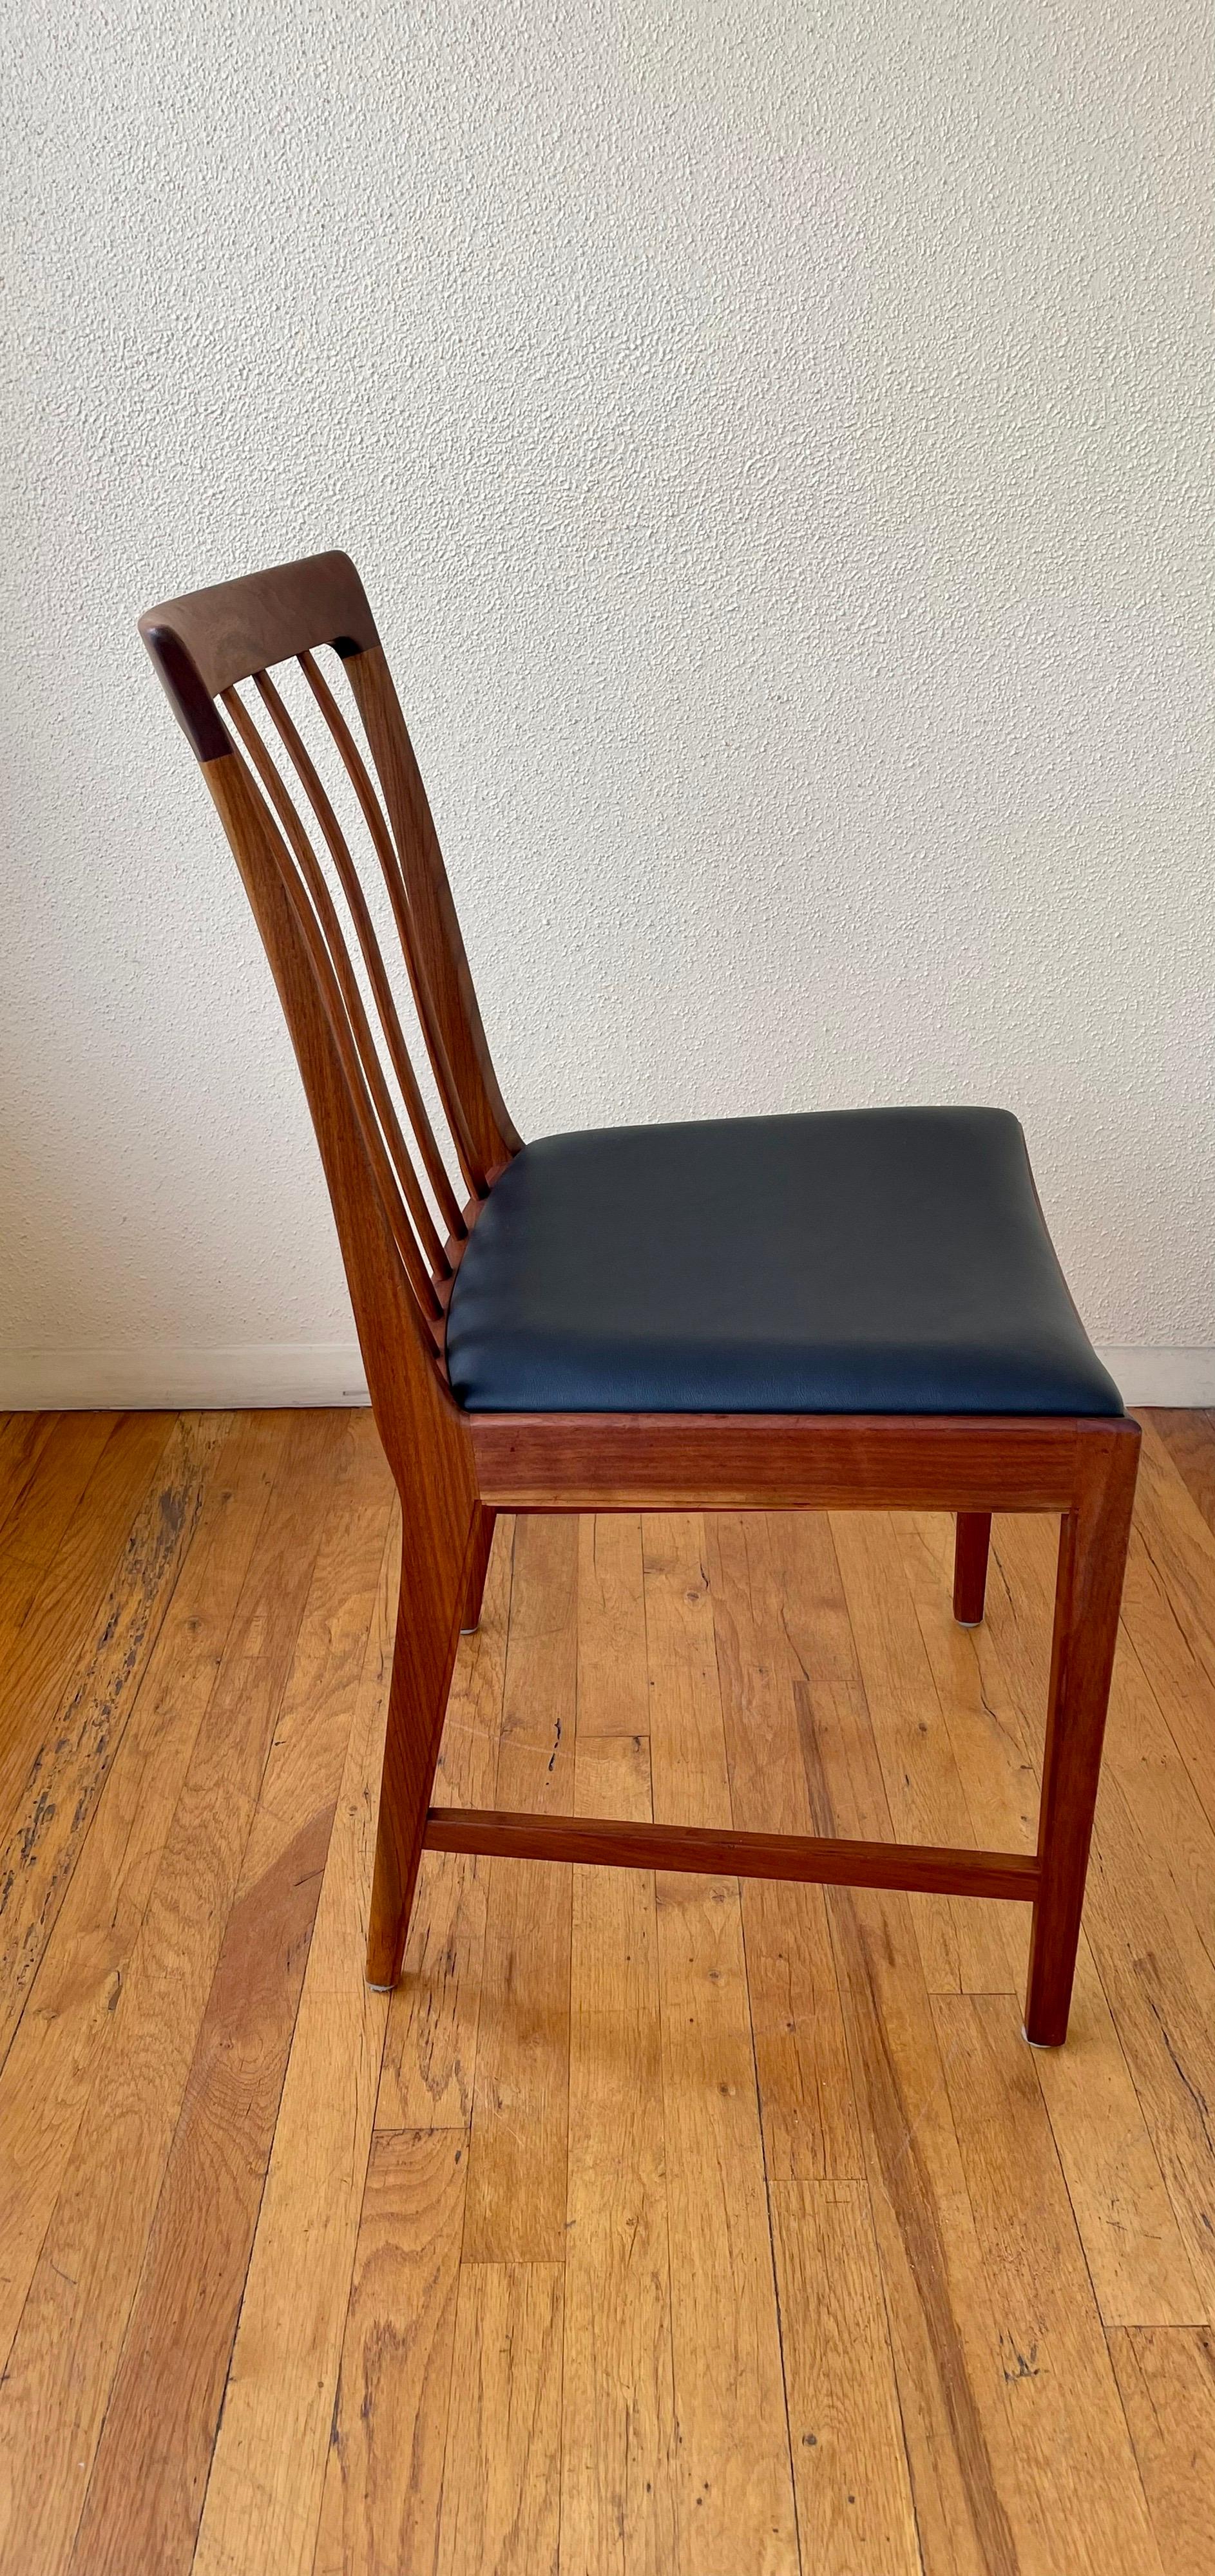 Scandinavian Modern Danish Modern Solid Sculpted Back Teak Desk Chair in Black Naugahyde Seat